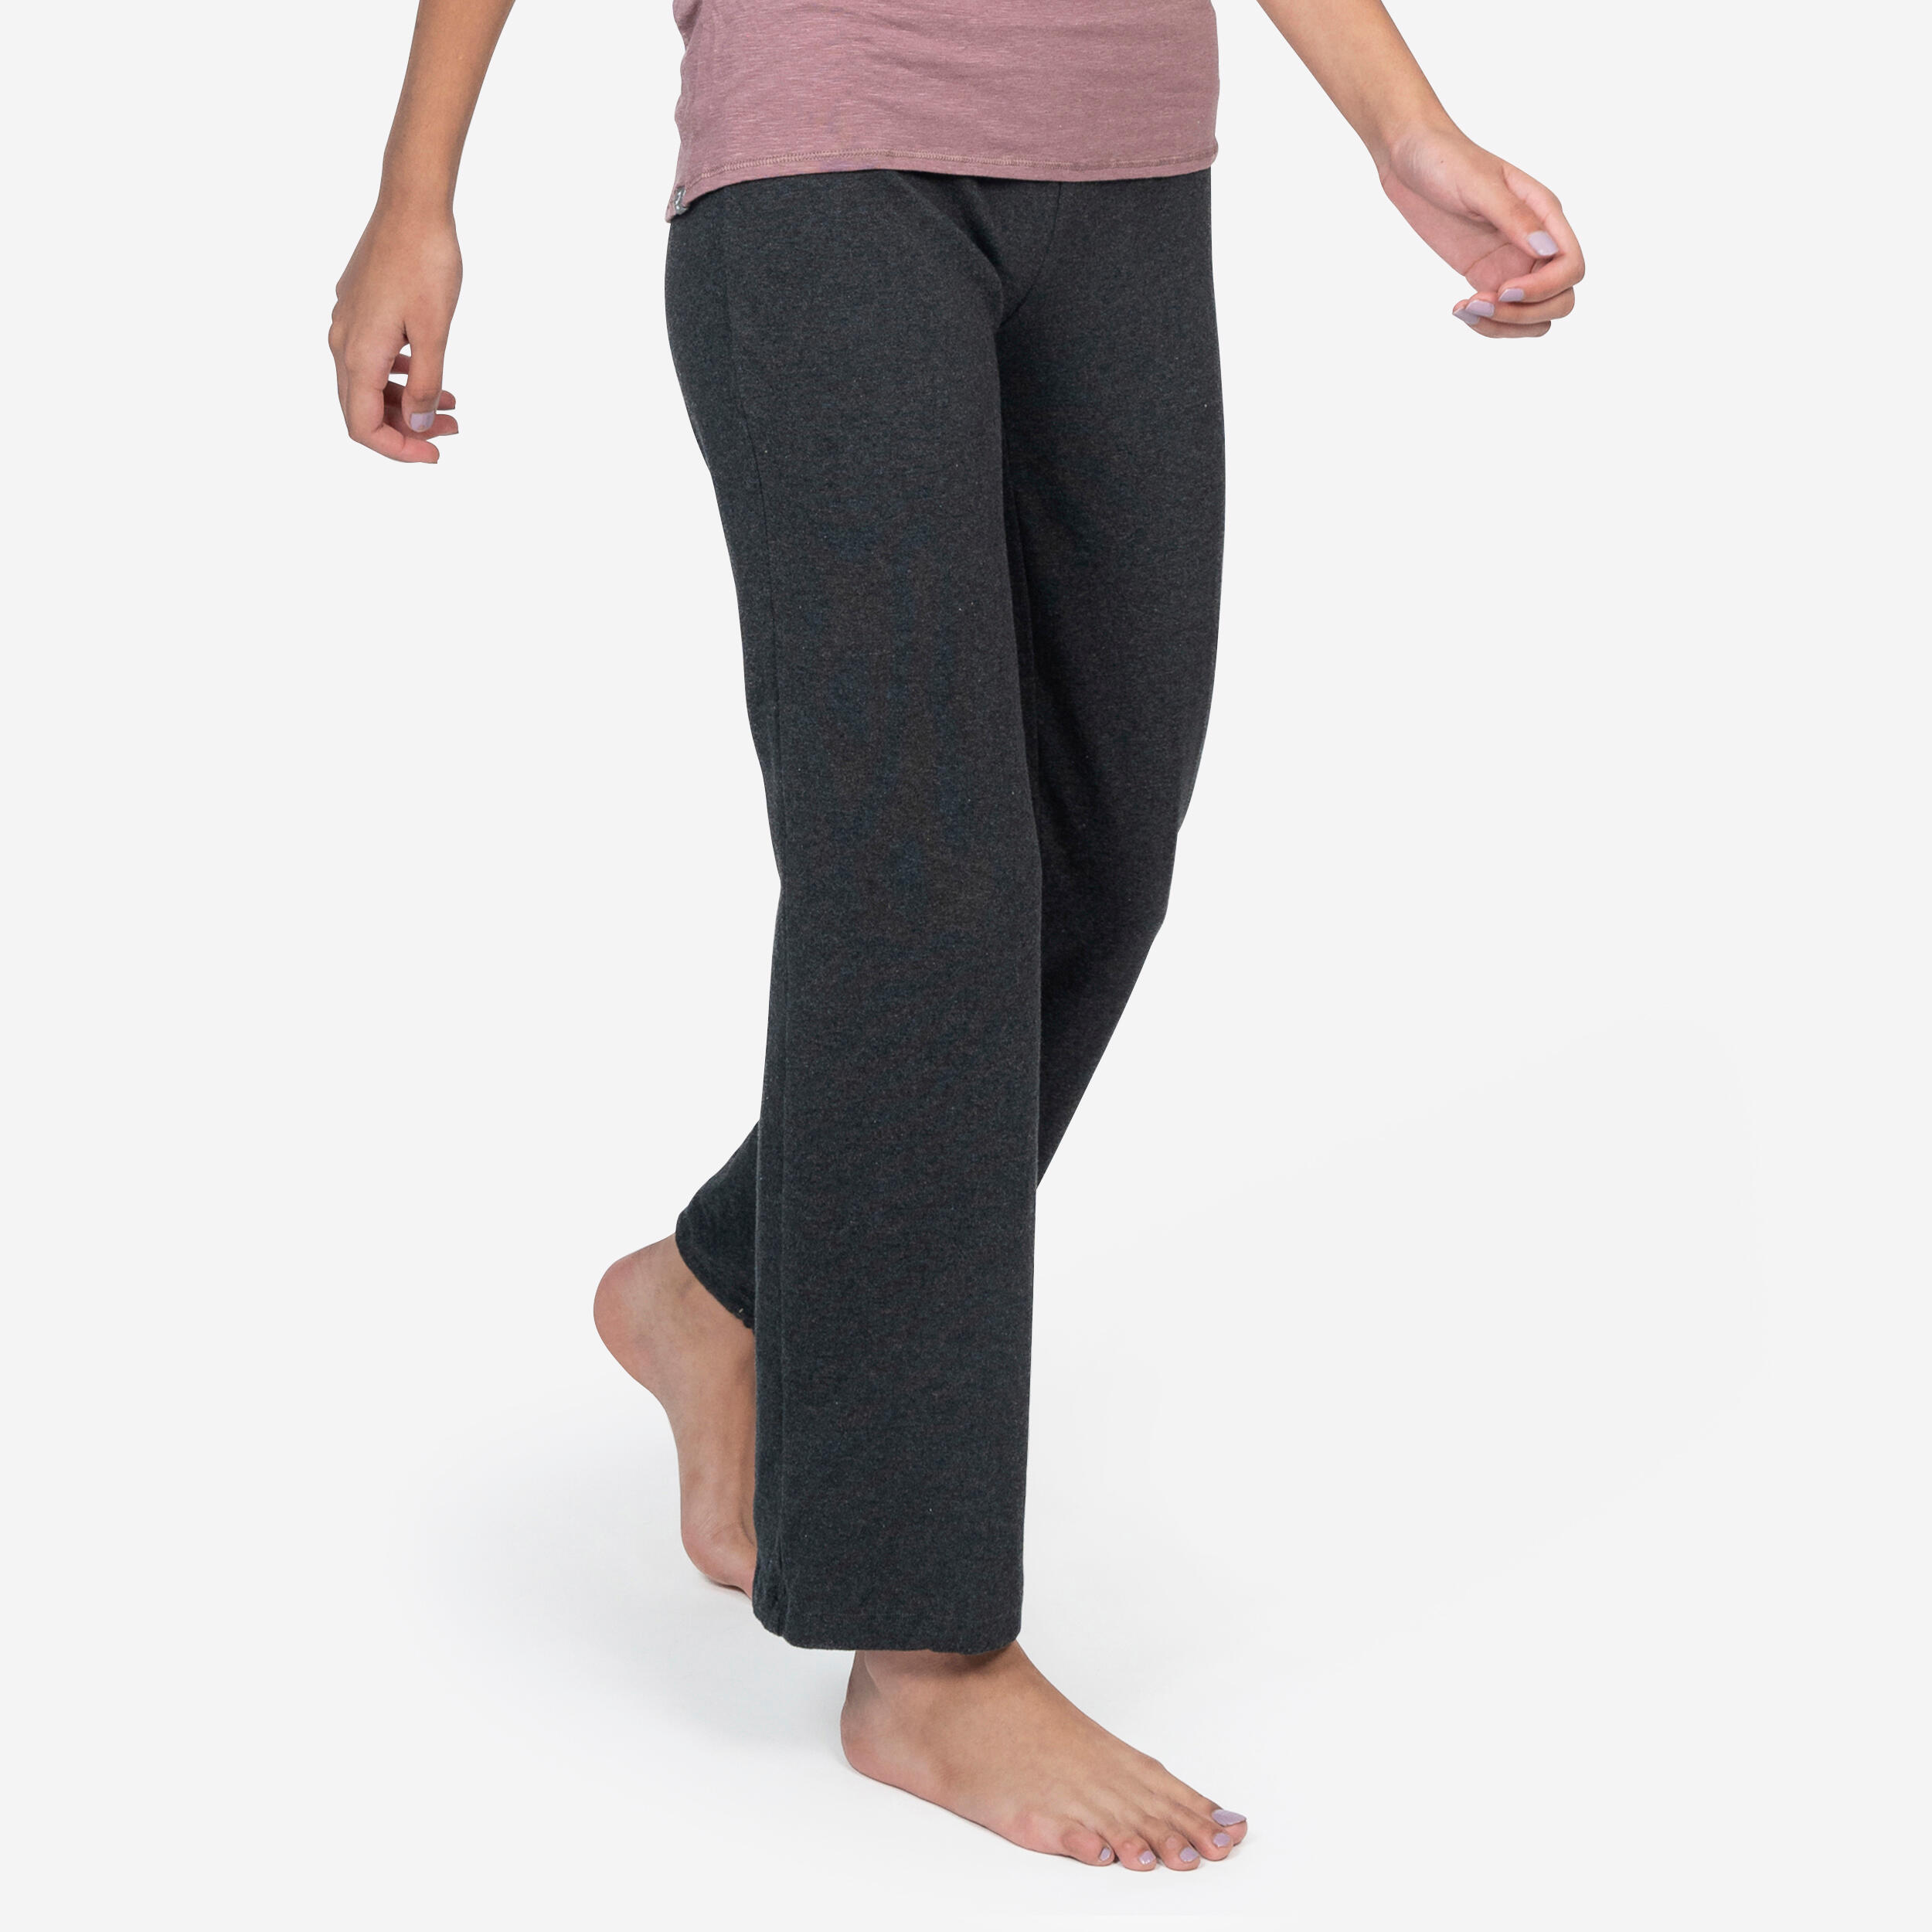 Buy Sheer Yoga Pants Online In India  Etsy India